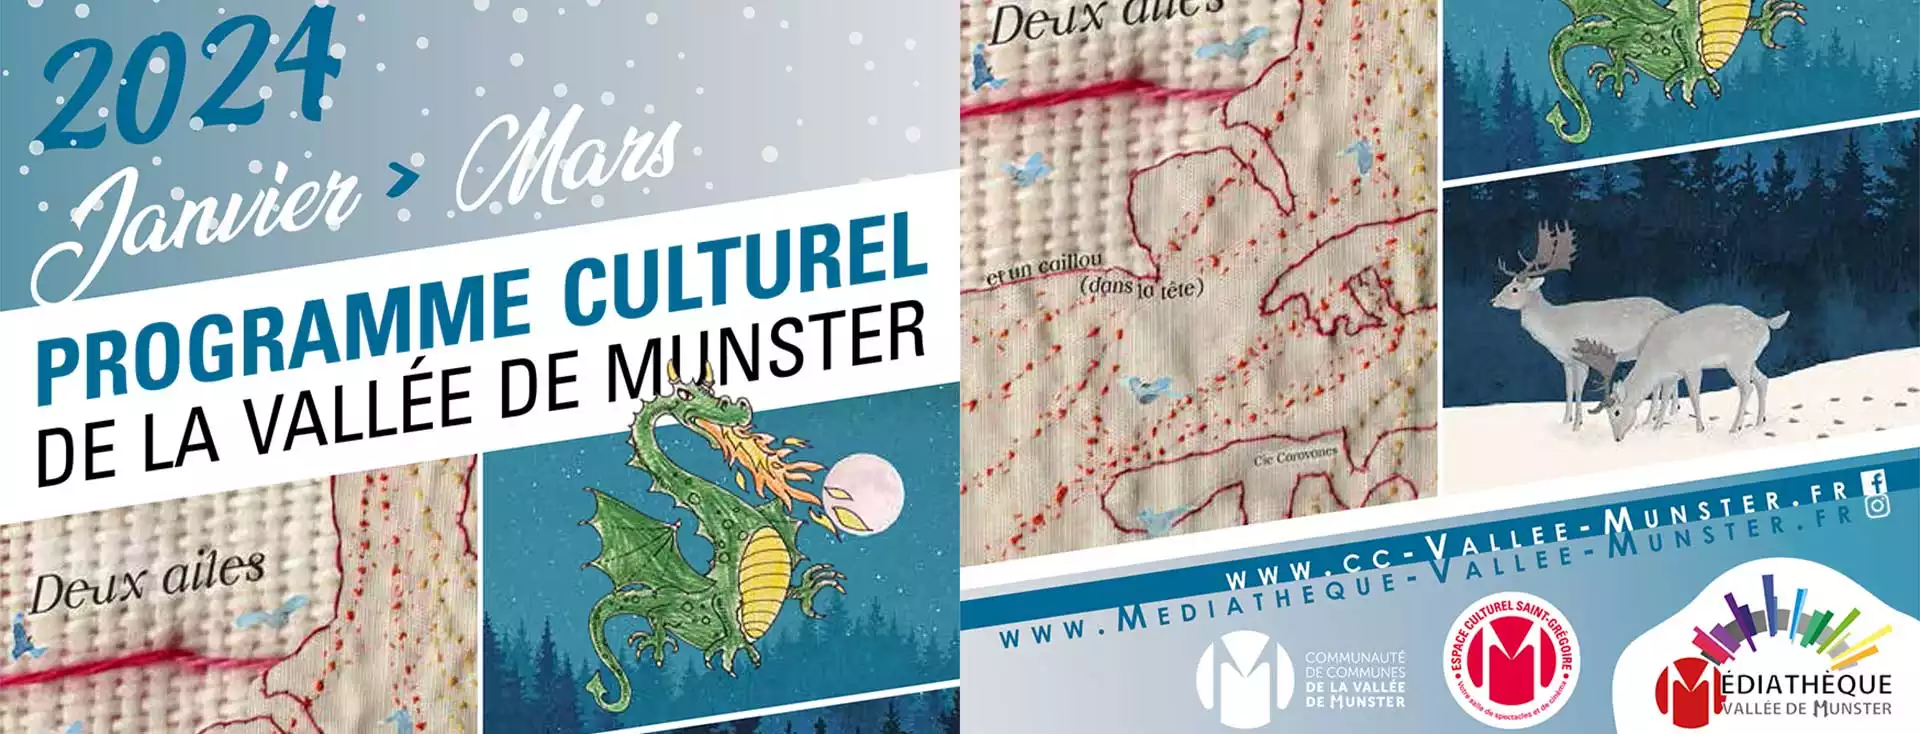 Programme culturel janvier mars 2024 Vallée de Munster